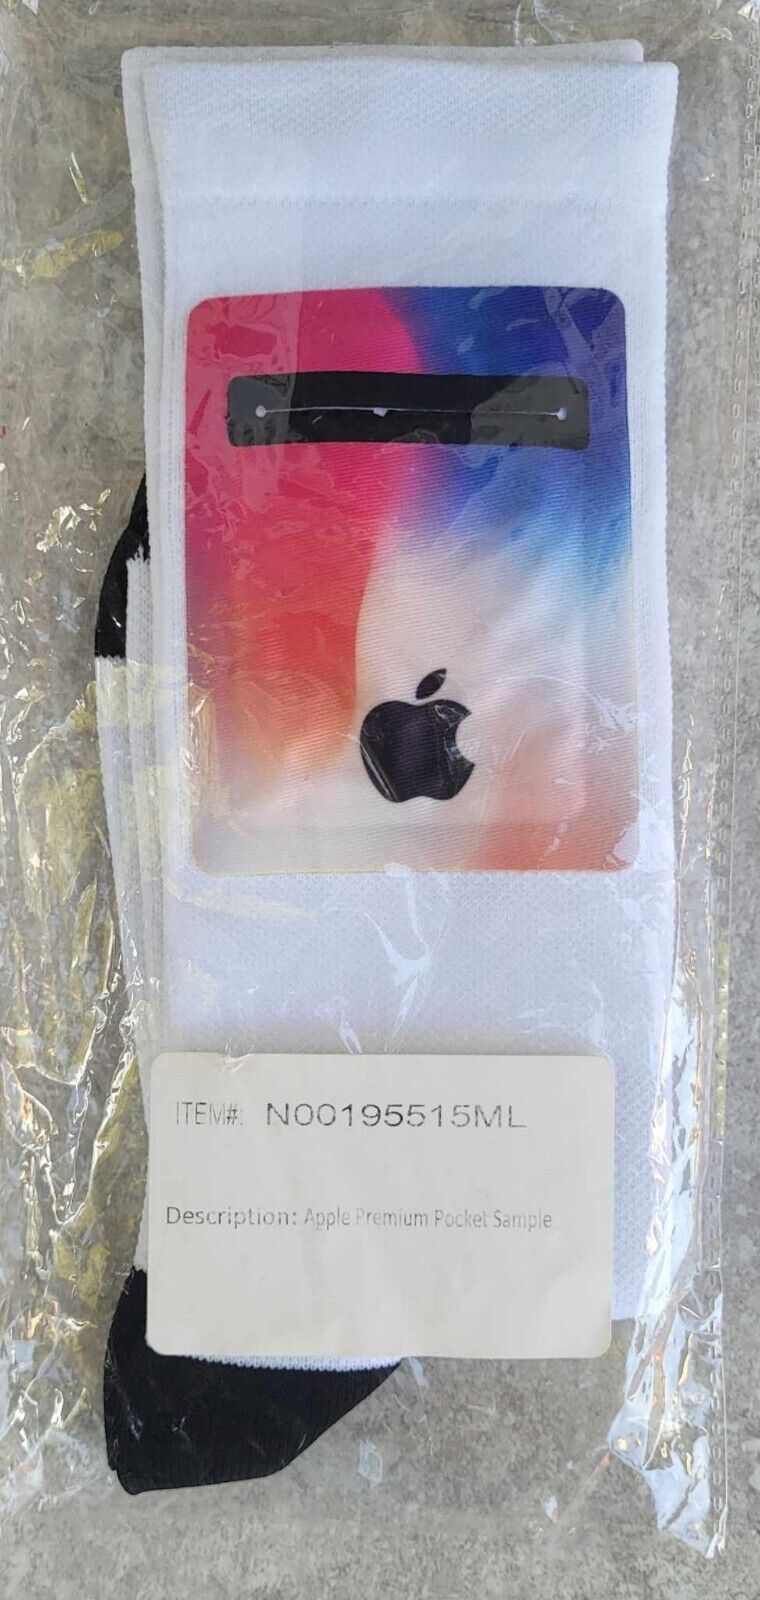 RARE VTG Prototype Macintosh Iphone Ipod Apple Tie Dyed Pocket Socks FREEUSHIP